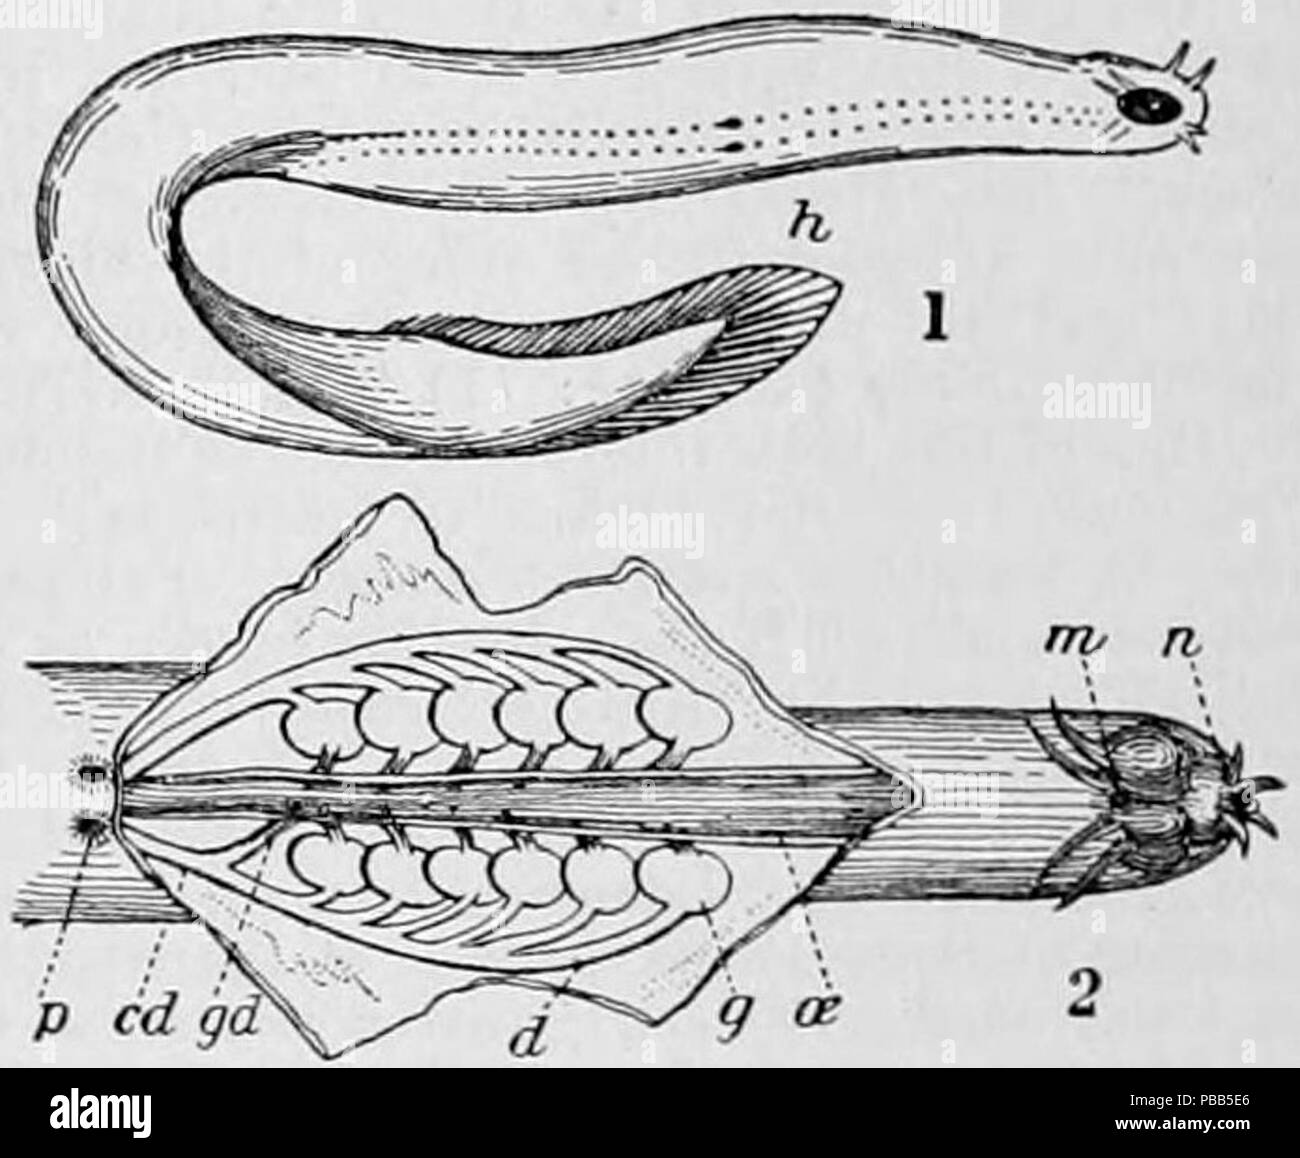 Hagfish Anatomy